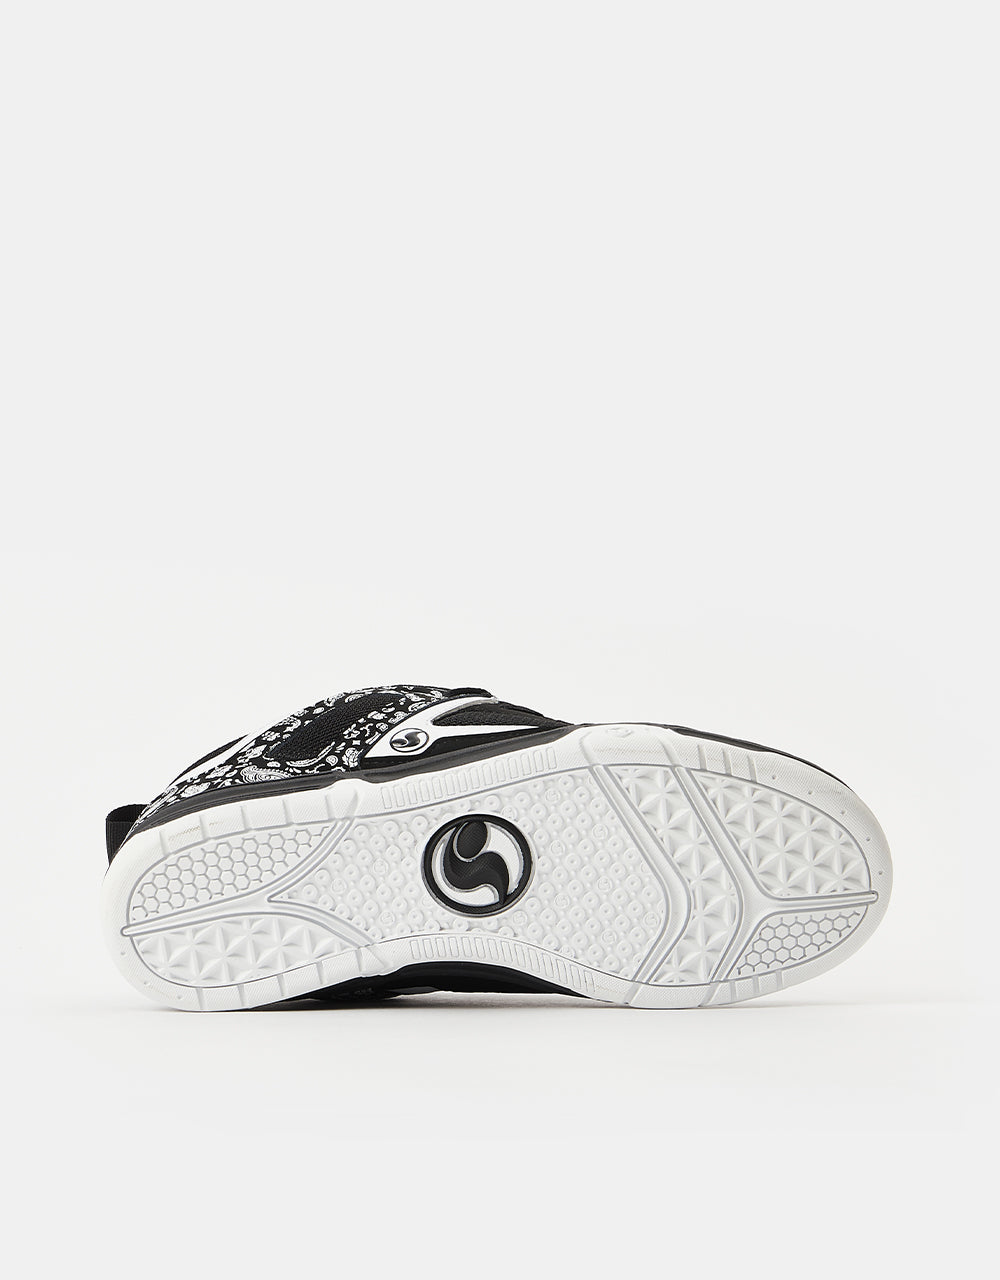 DVS Gambol Skate Shoes - Black/White/PU Nubuck